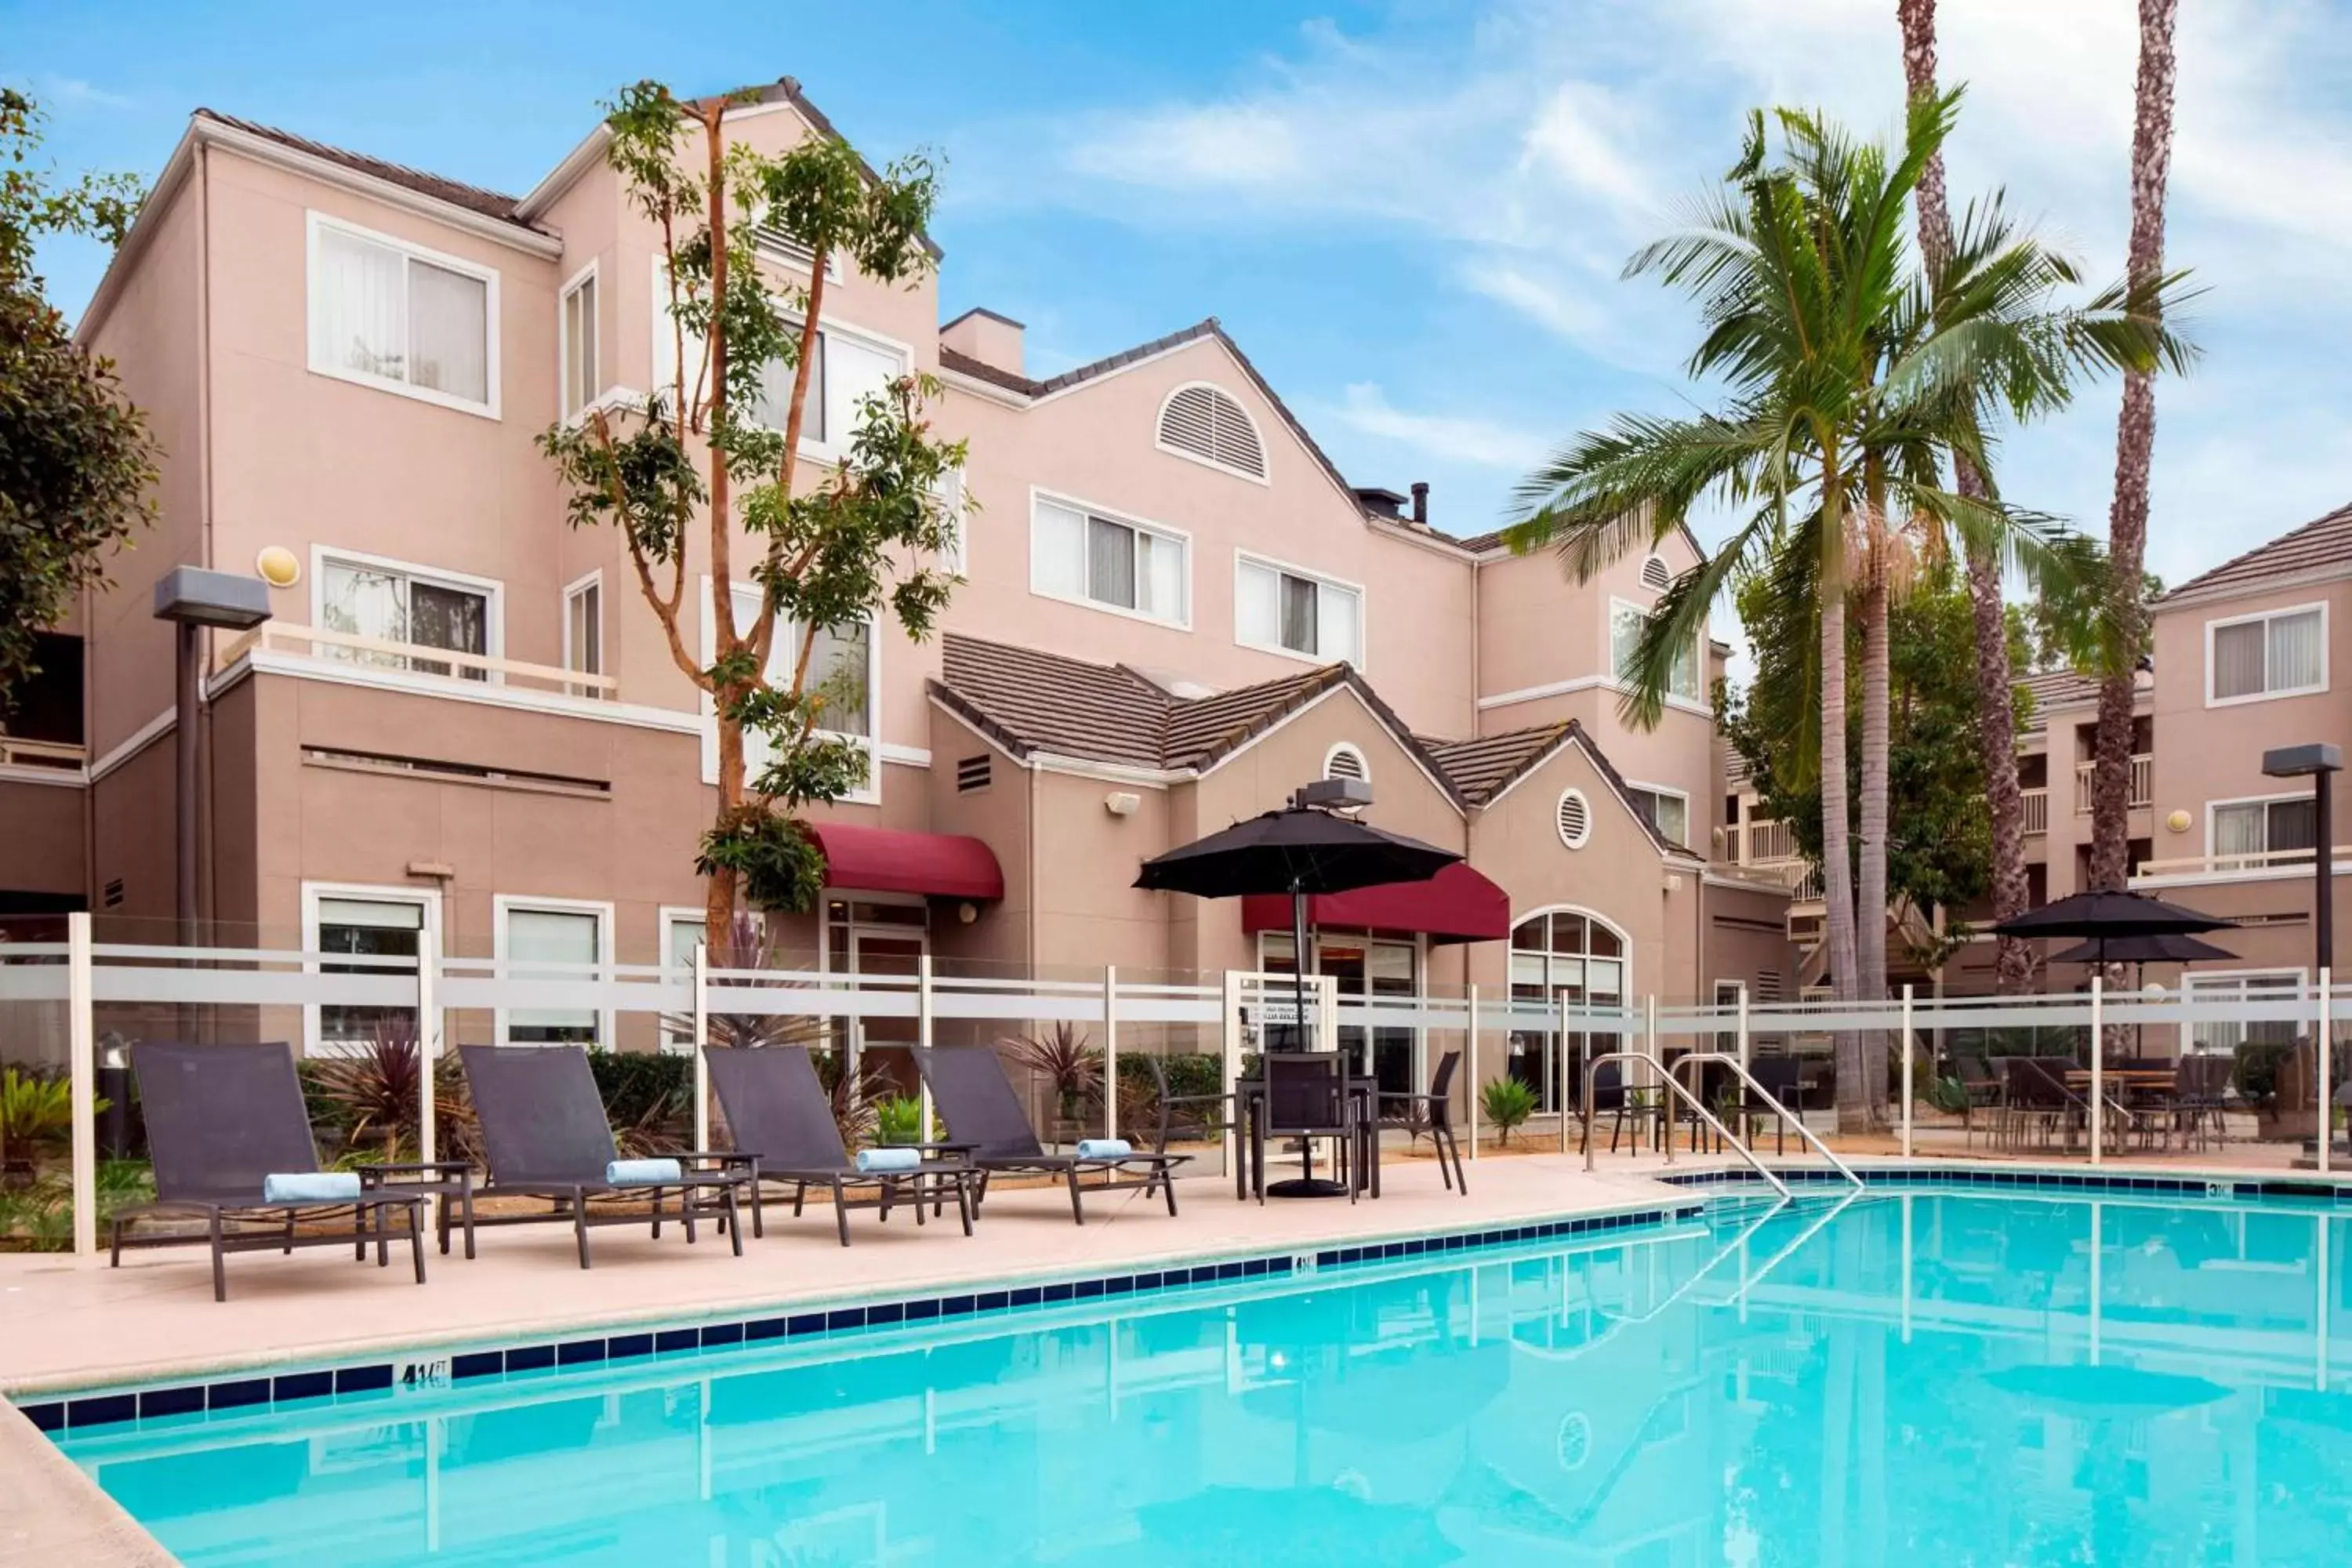 Activities, Property Building in Sonesta ES Suites Carmel Mountain - San Diego